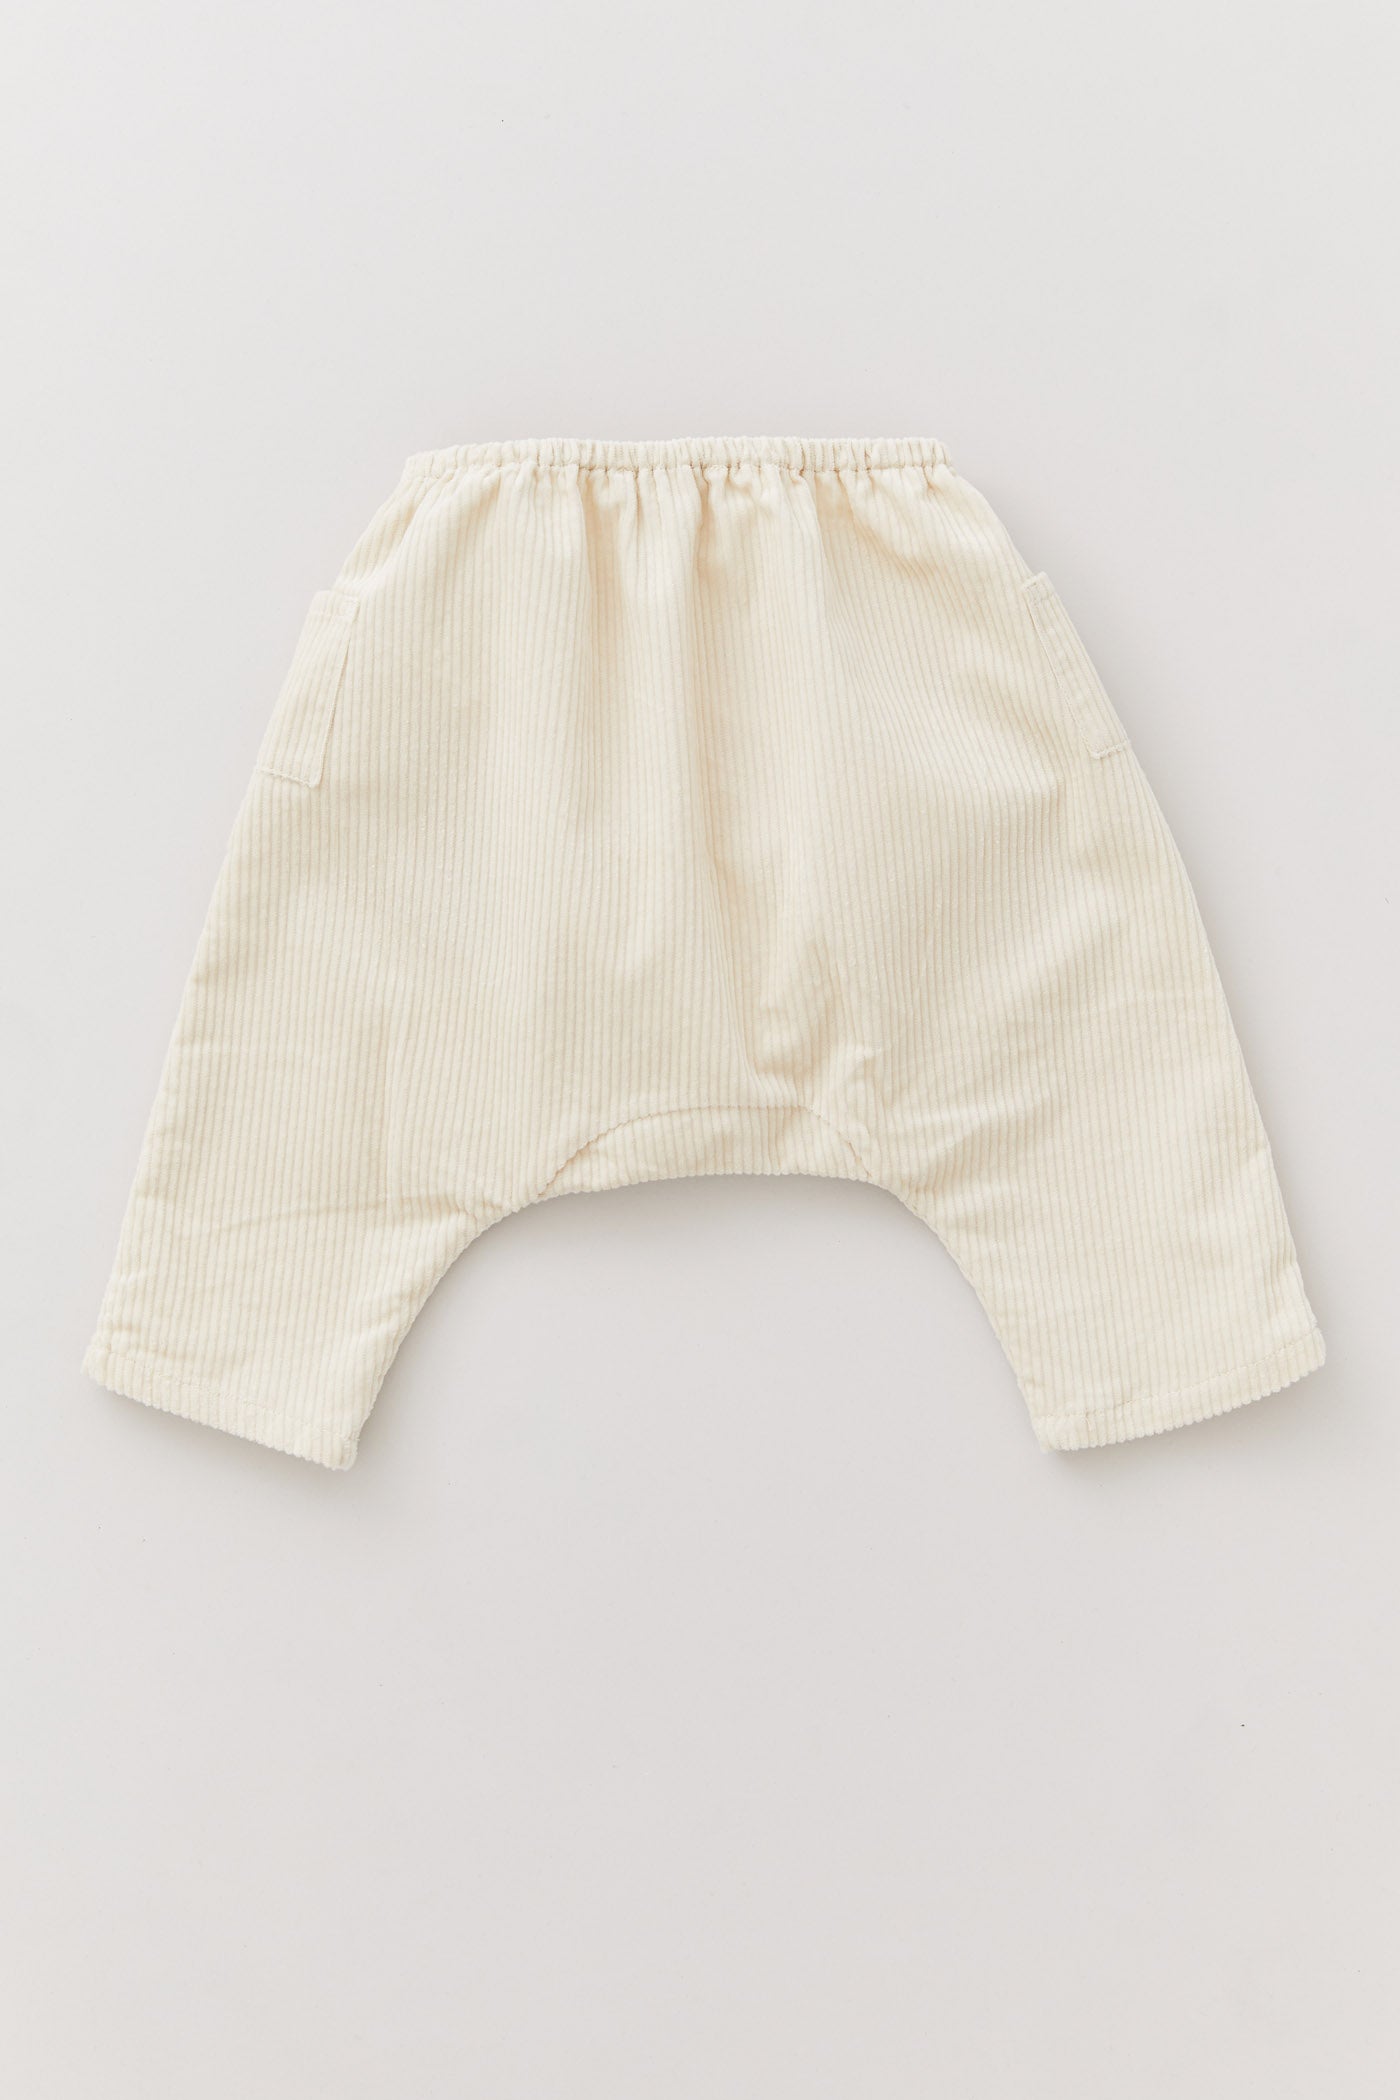 Baby Apple Trousers Cream Corduroy - Designed by Ingrid Lewis - Strawberries & Cream